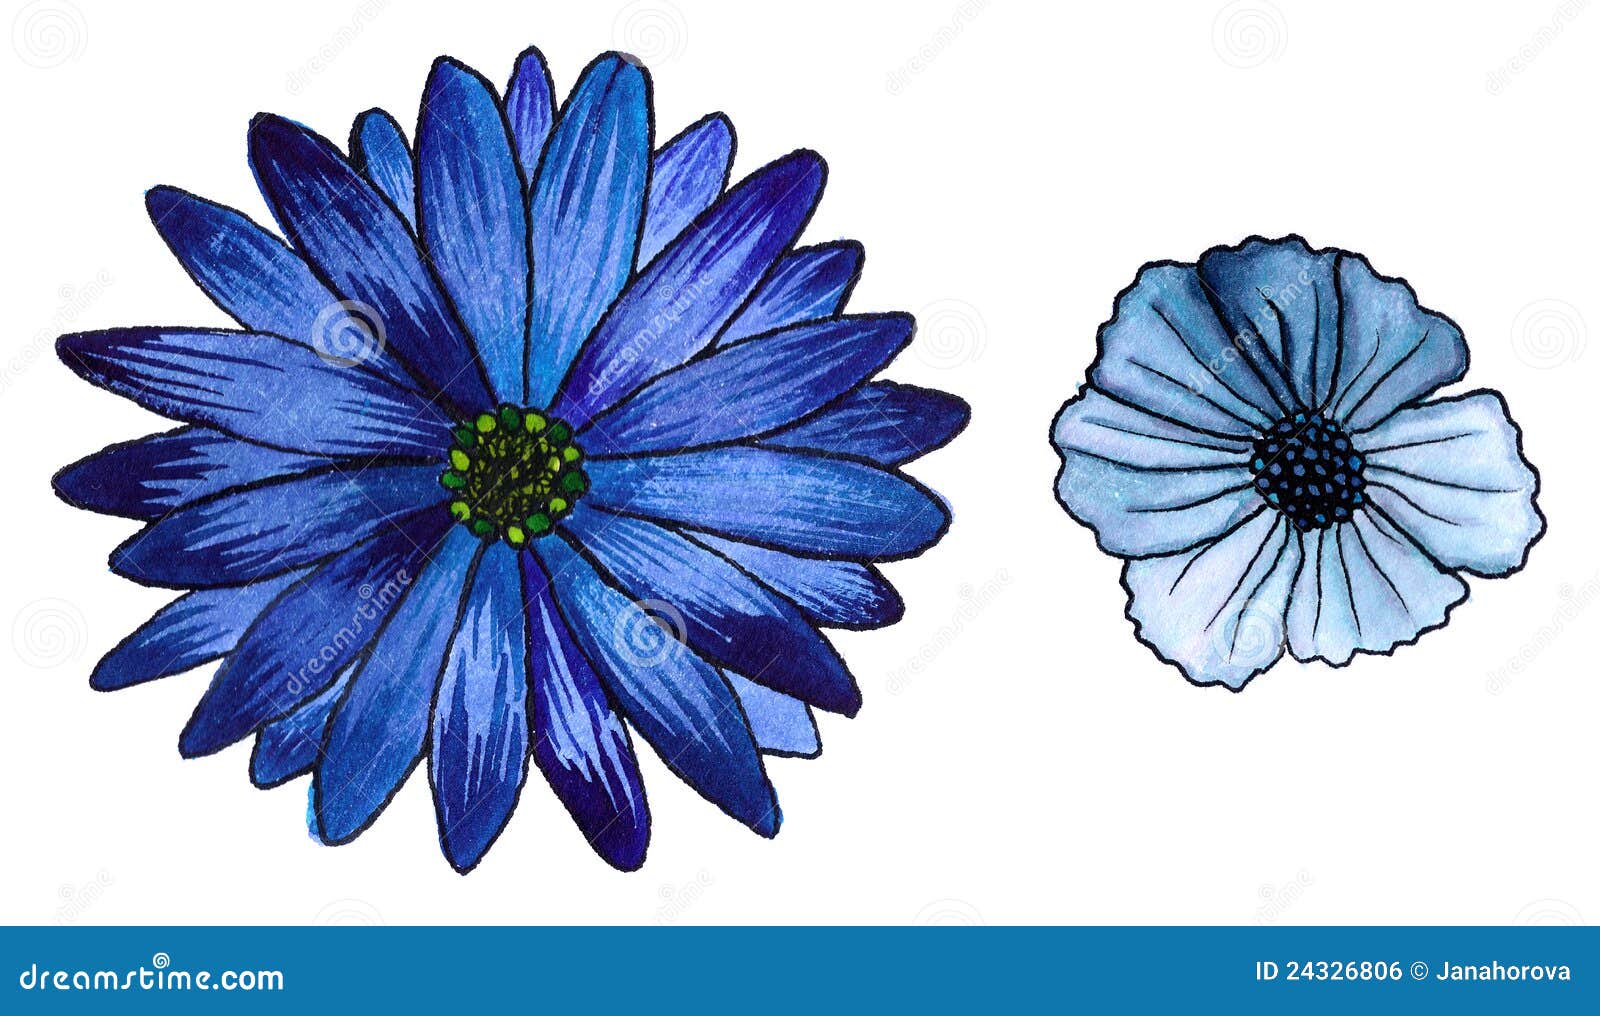 Blue flowers stock illustration. Illustration of blue - 24326806